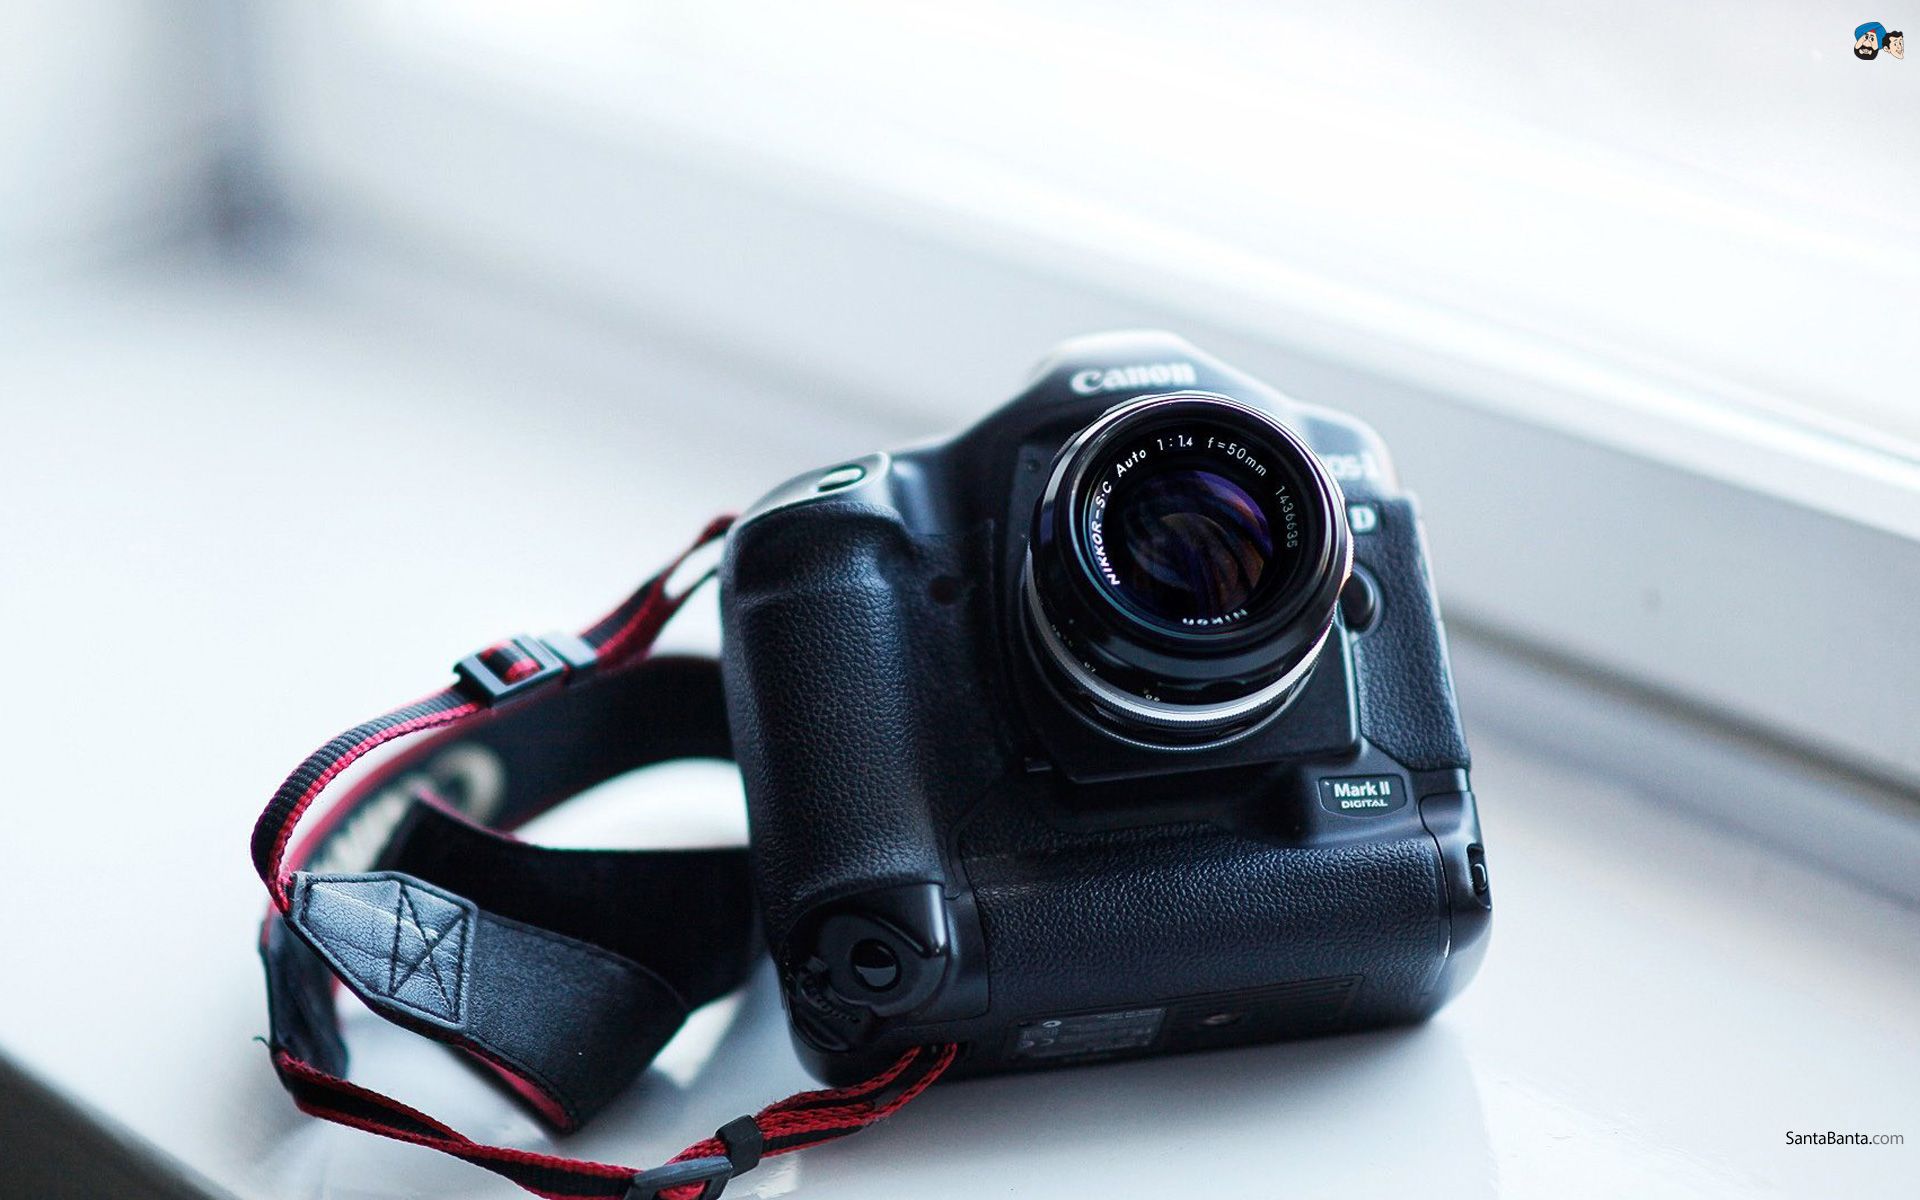 Canon EOS 5D Mark II Camera